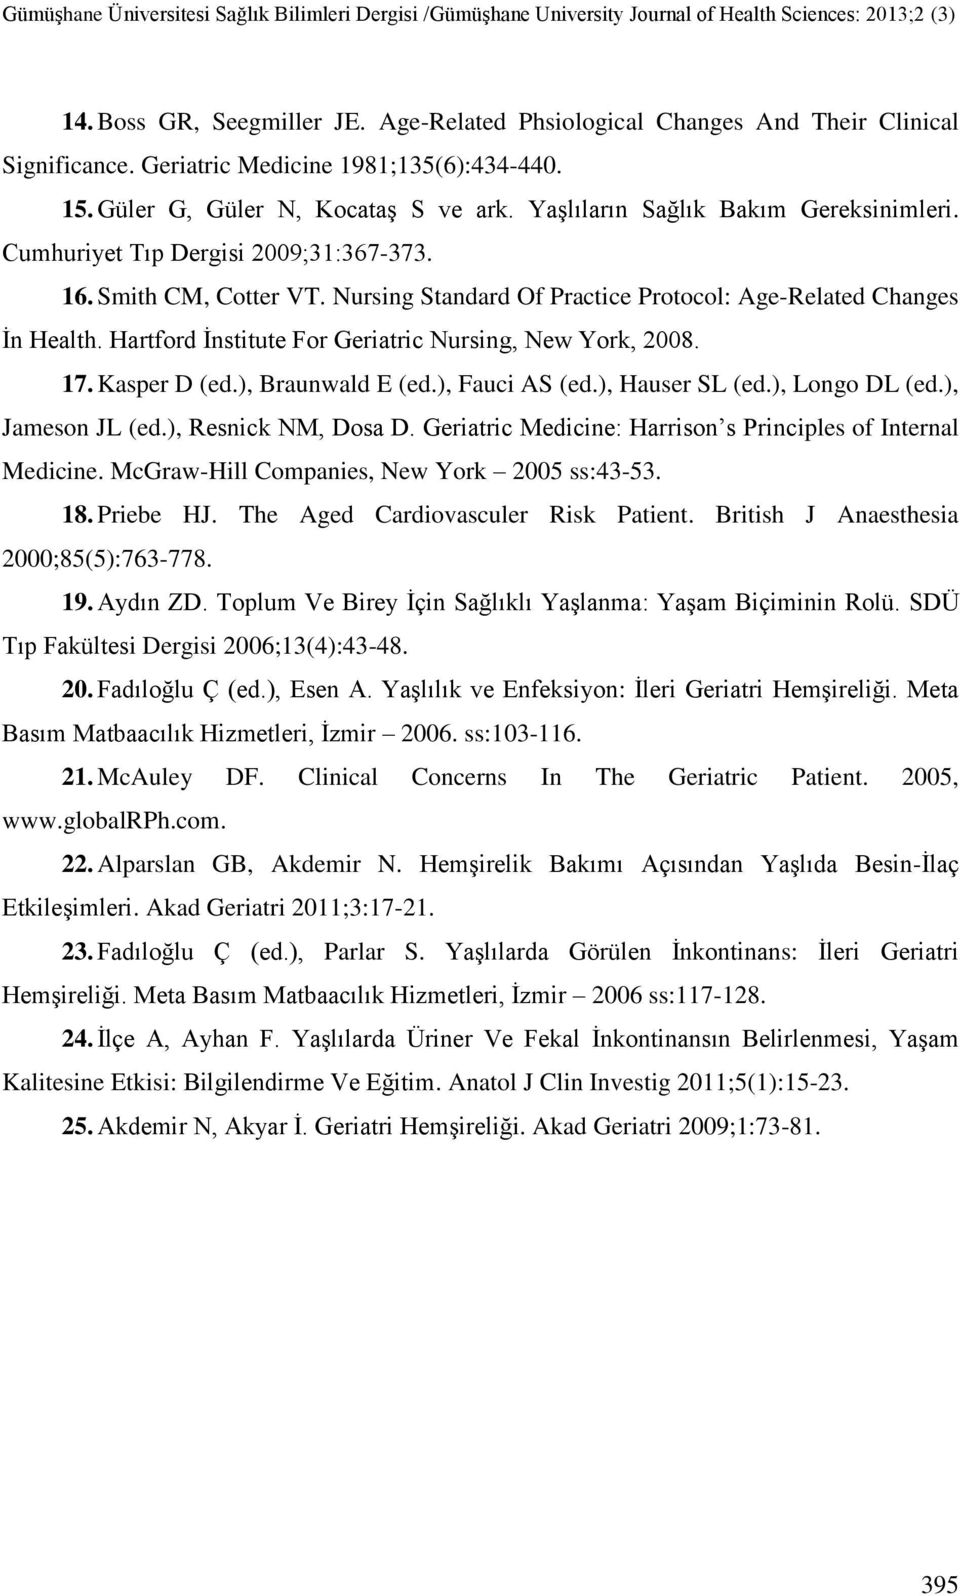 Hartford İnstitute For Geriatric Nursing, New York, 2008. 17. Kasper D (ed.), Braunwald E (ed.), Fauci AS (ed.), Hauser SL (ed.), Longo DL (ed.), Jameson JL (ed.), Resnick NM, Dosa D.